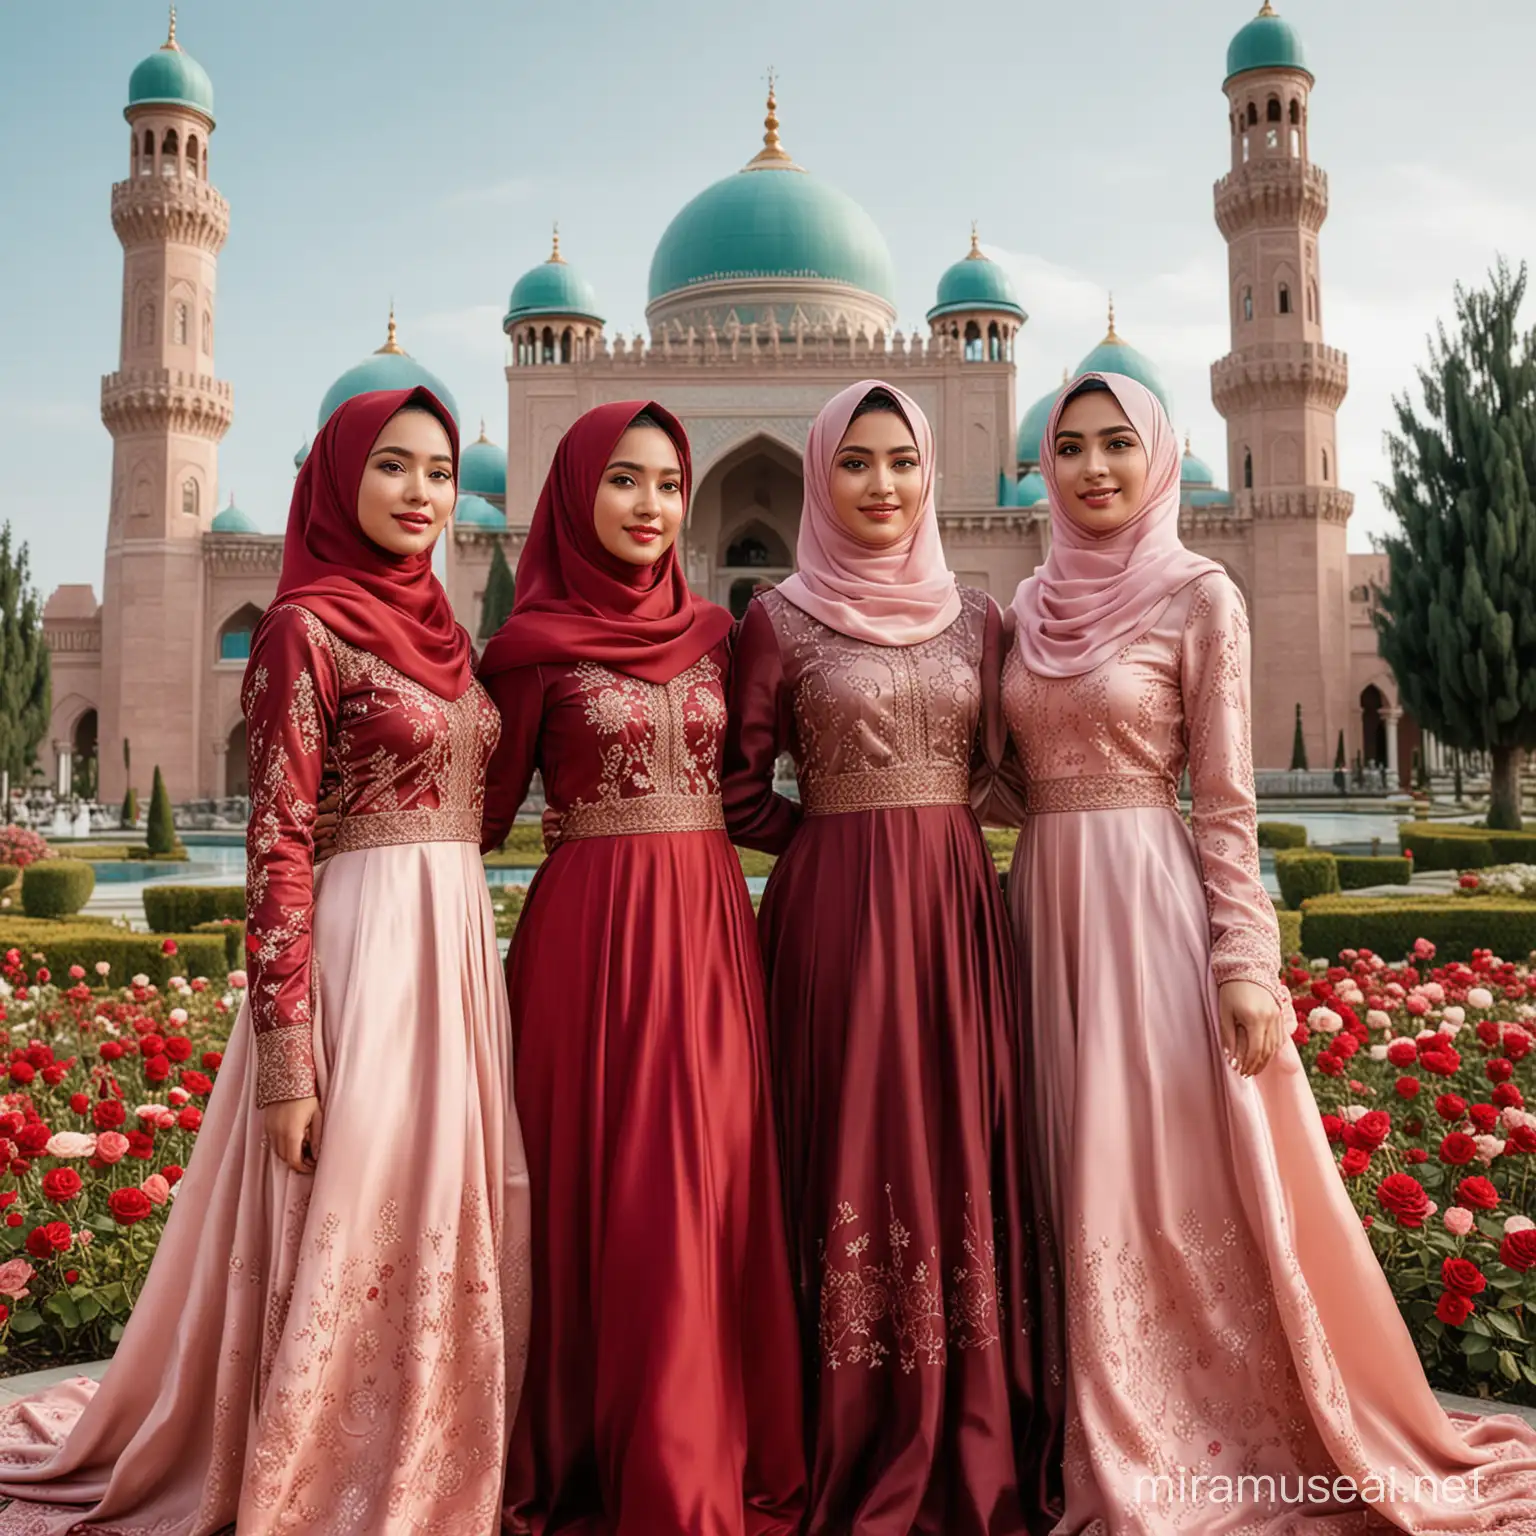 Tiga putri cantik jelita, memakai gaun sutra mewah, warna merah maroon, muslimah, wajah indonesia, baiground taman bunga mawar warna warni ada masjid indah
